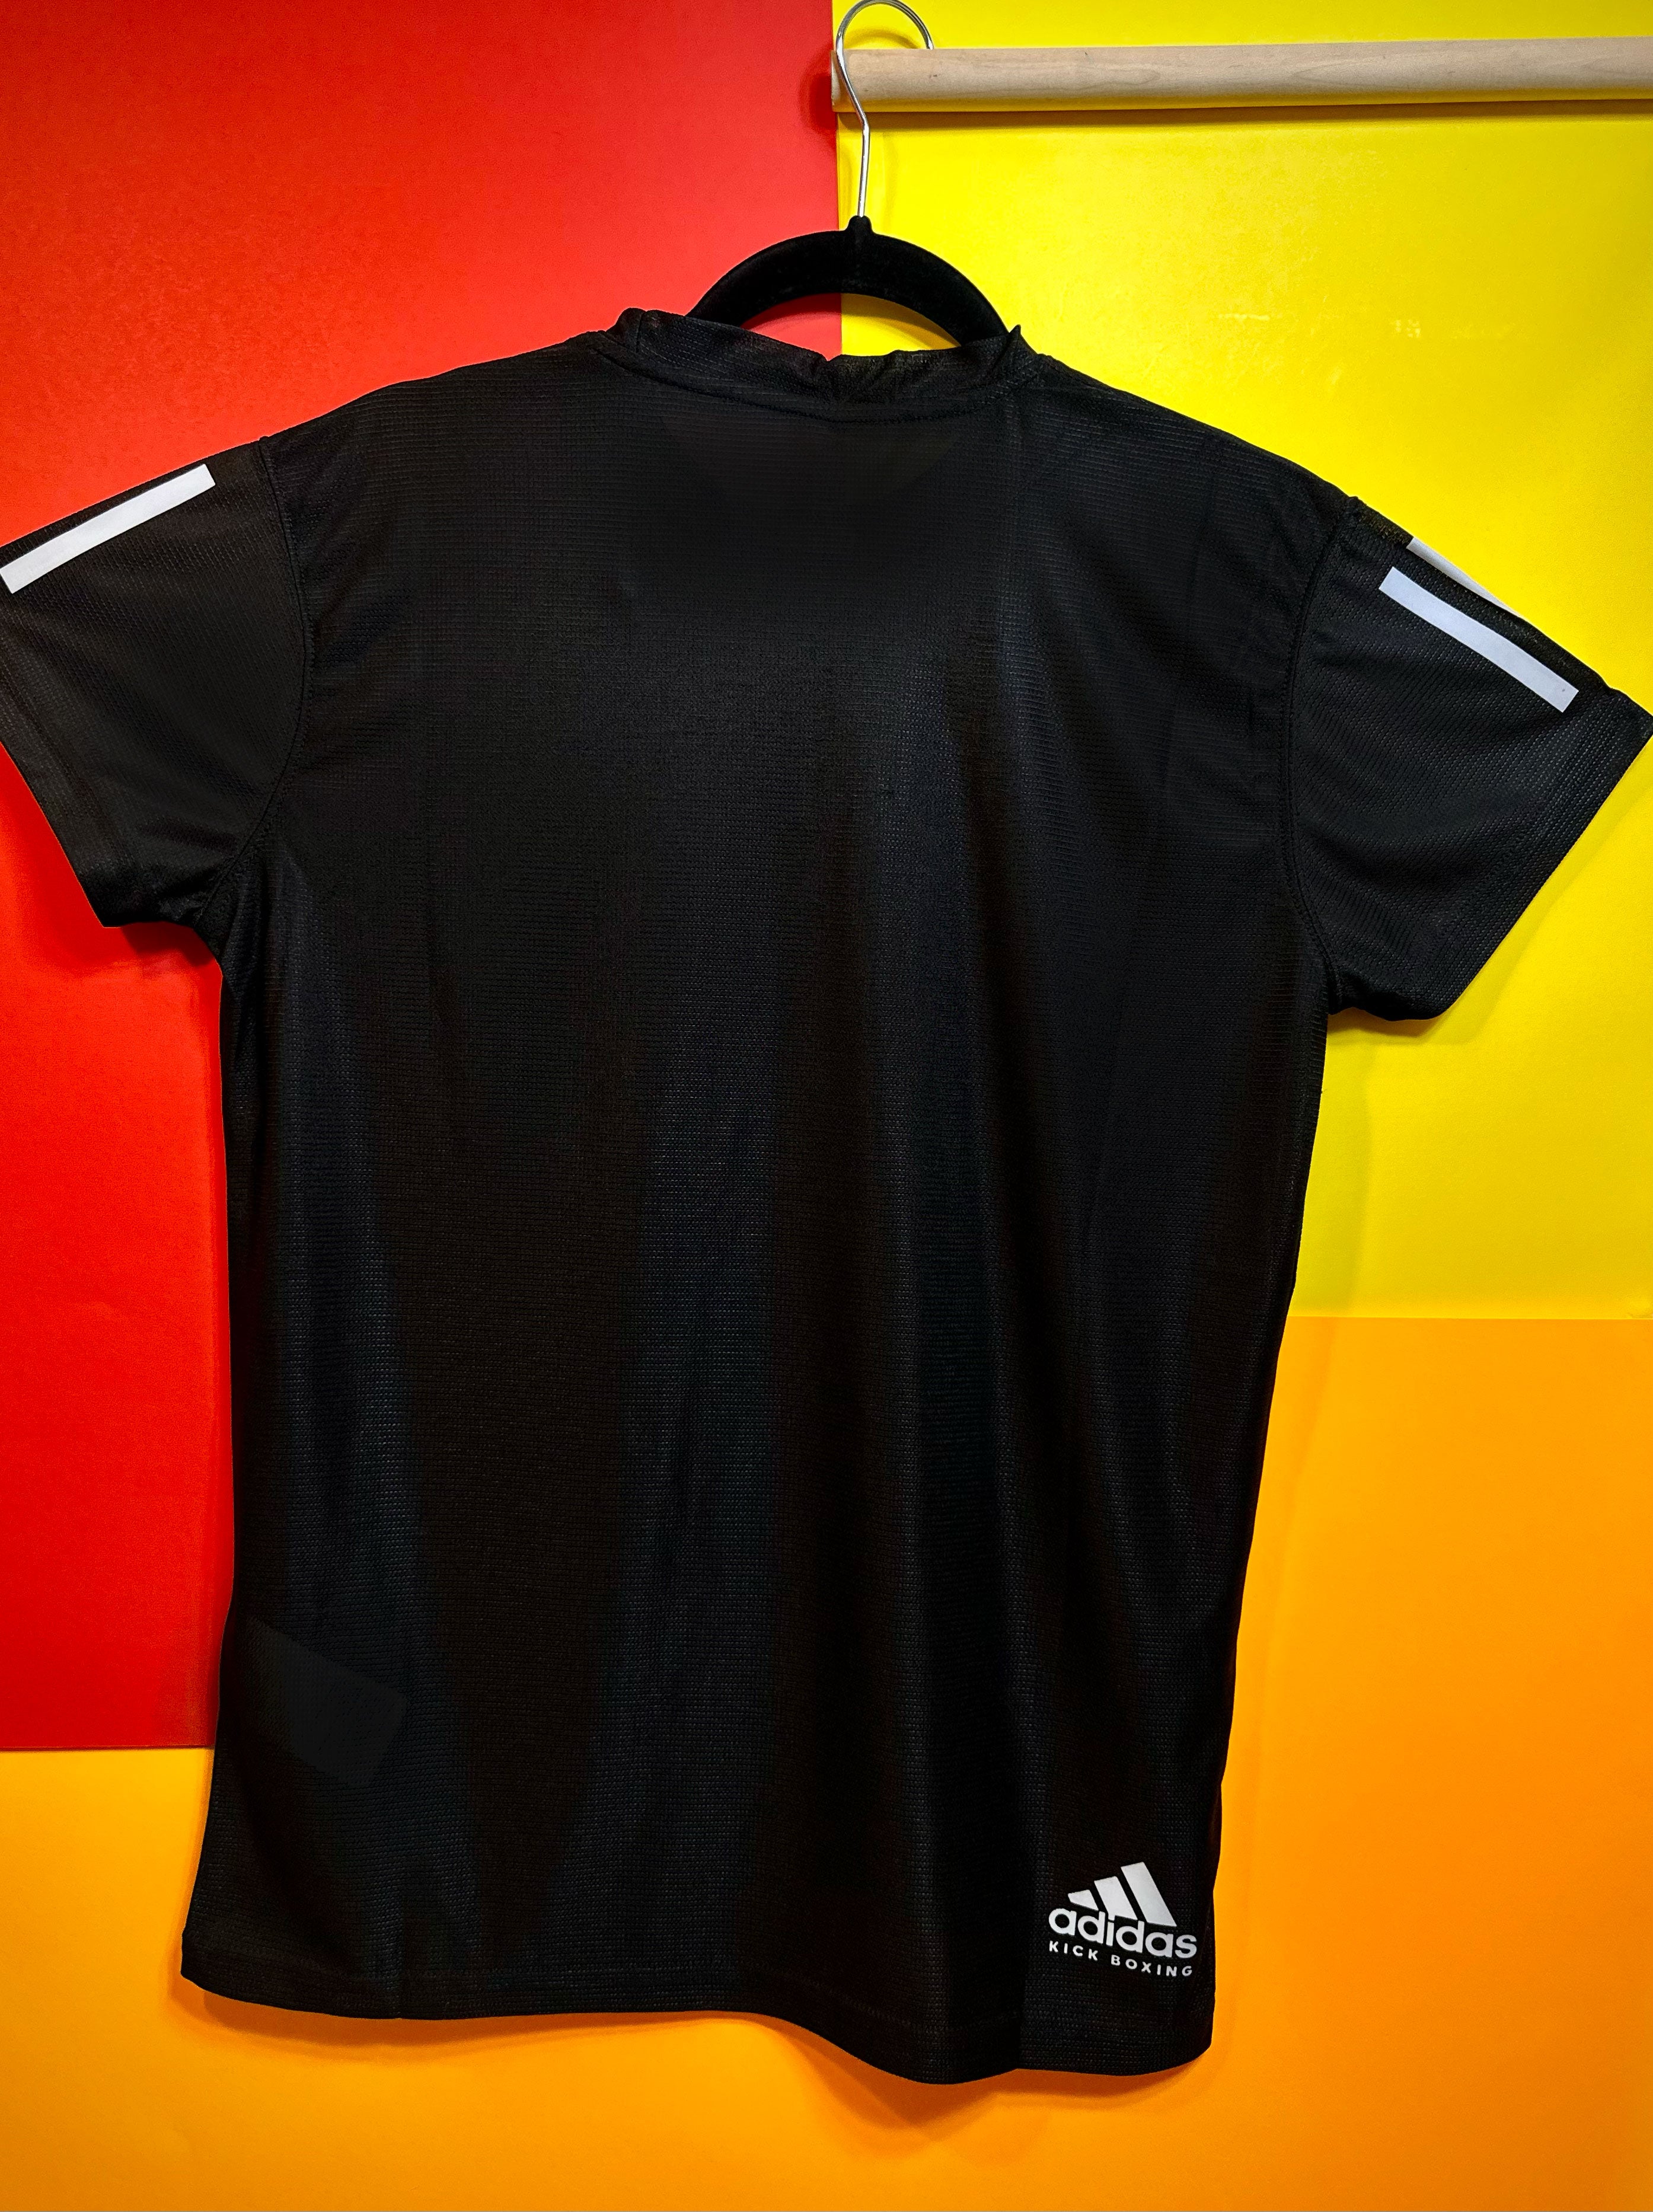 Adidas Unisex Basic Kickboxing T-Shirt adiKBTS100, Moisture-Wicking Polyester, Black color, L size